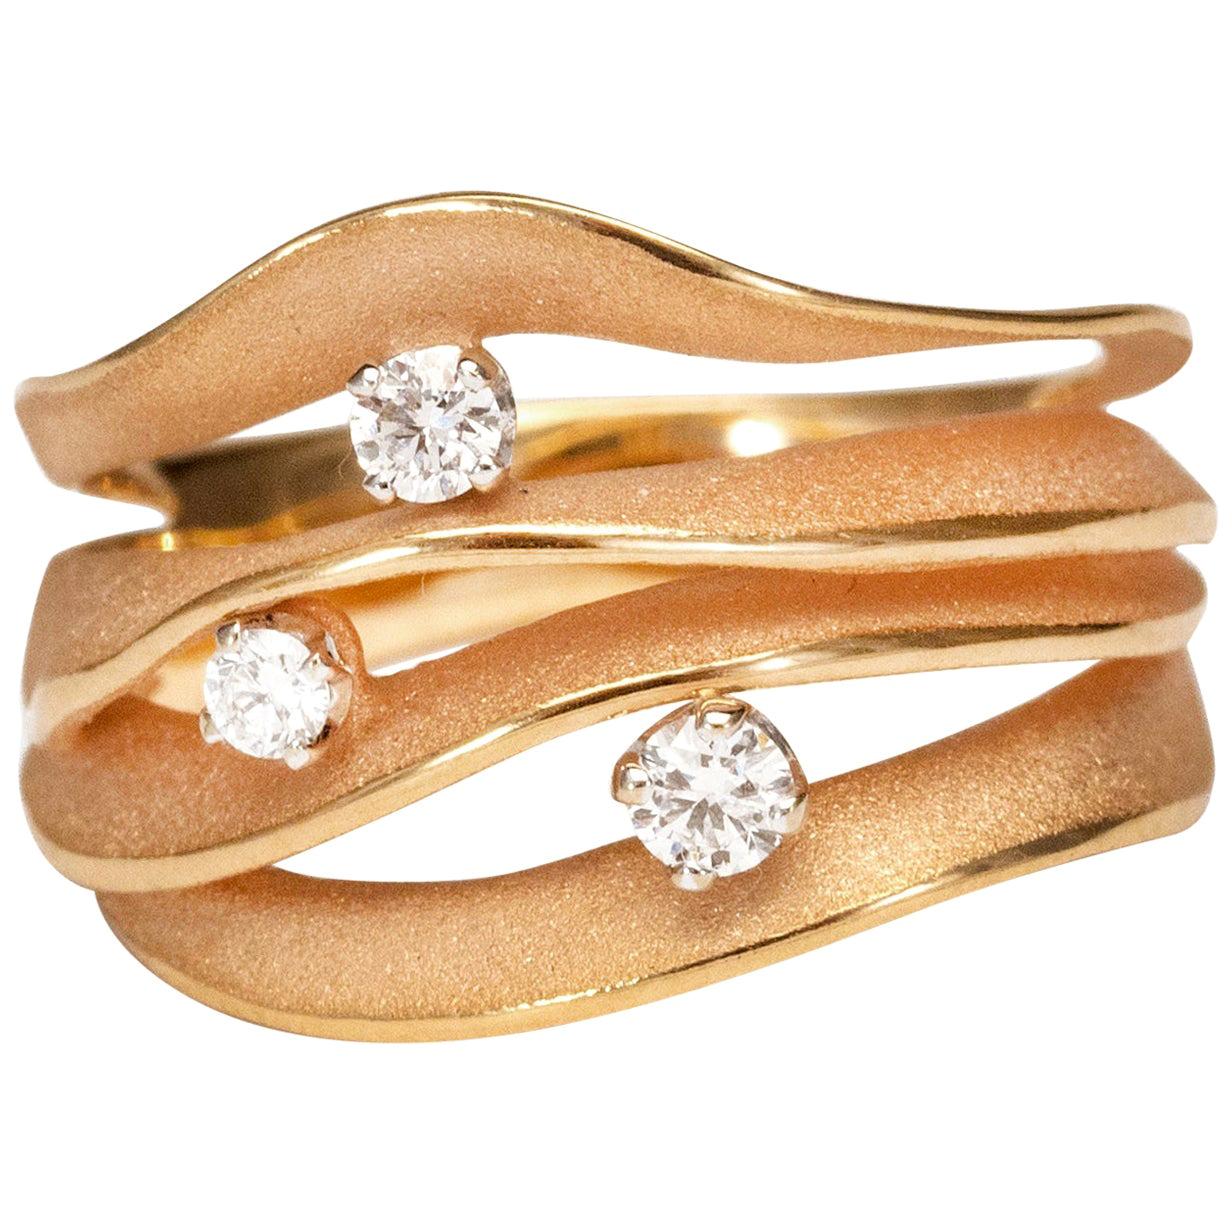 Annamaria Cammilli Bague Dune Royal avec diamants en or champagne 18 carats